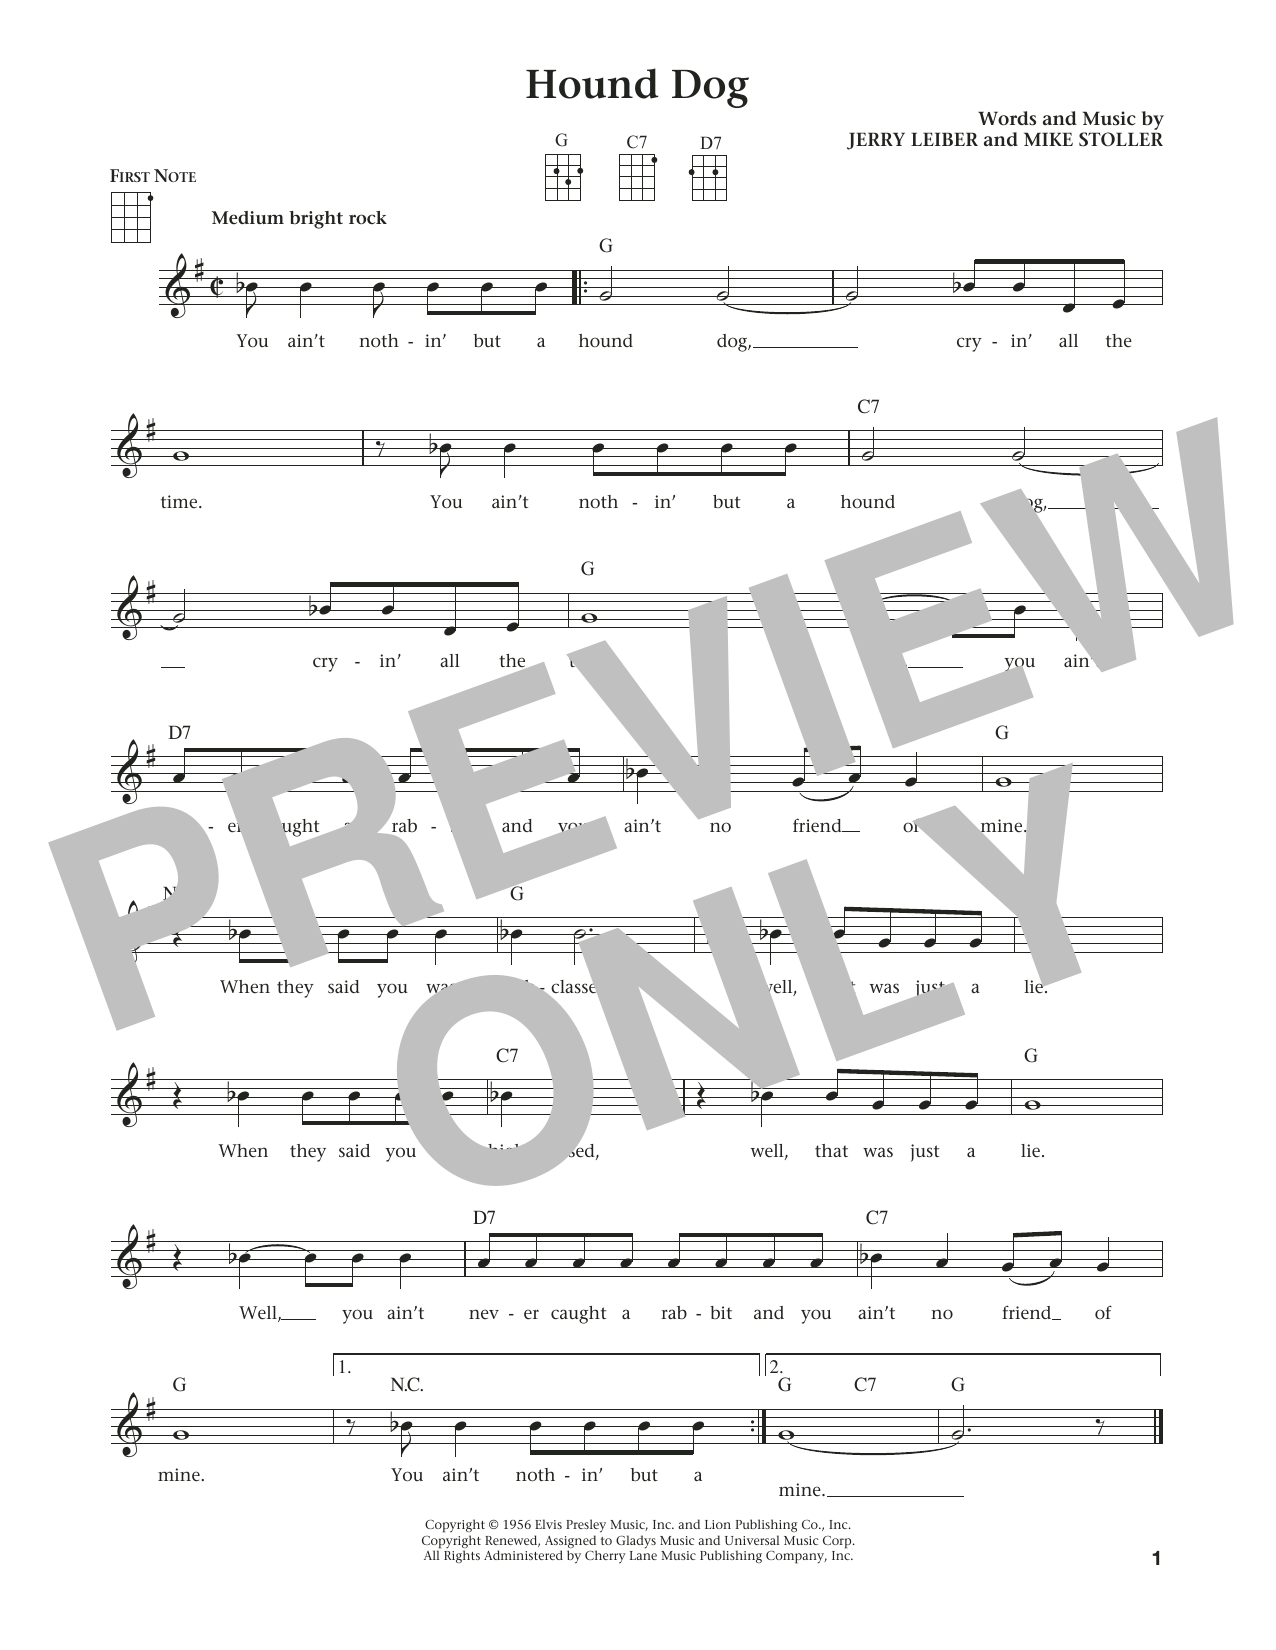 Elvis Presley Hound Dog (from The Daily Ukulele) (arr. Liz and Jim Beloff) Sheet Music Notes & Chords for Ukulele - Download or Print PDF